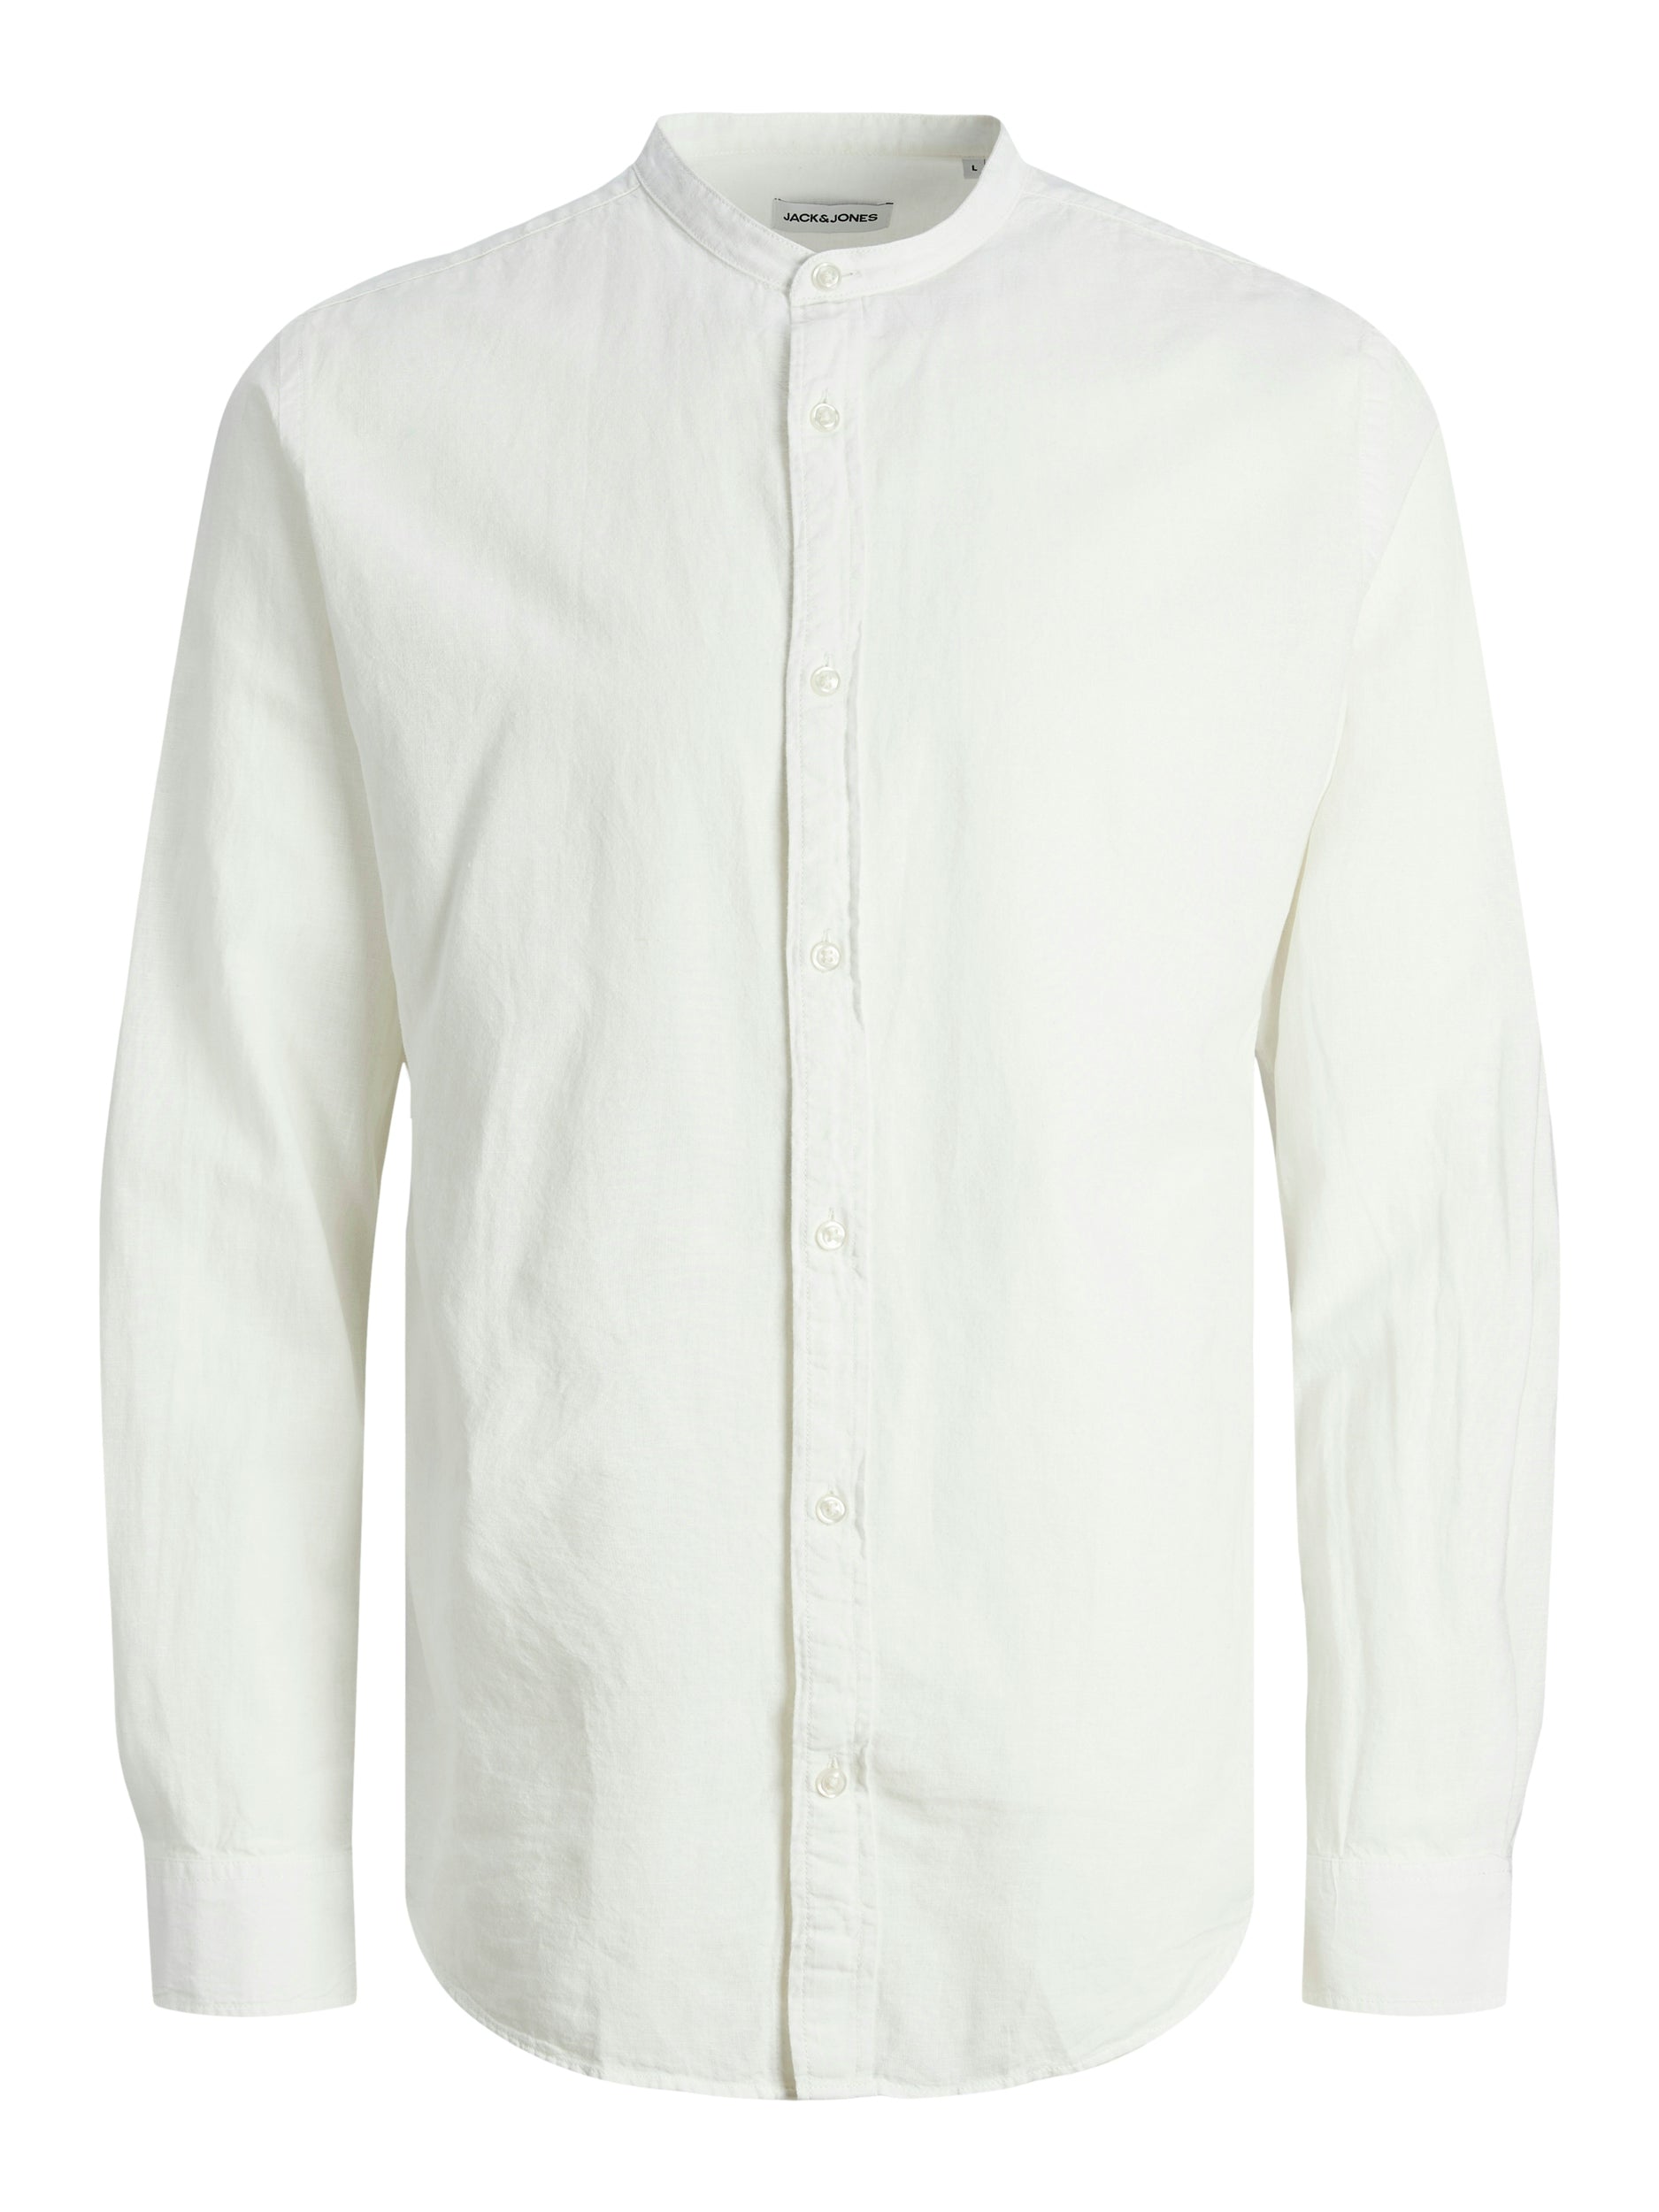 Men's Linen Band Shirt Long Sleeve-White-Front View